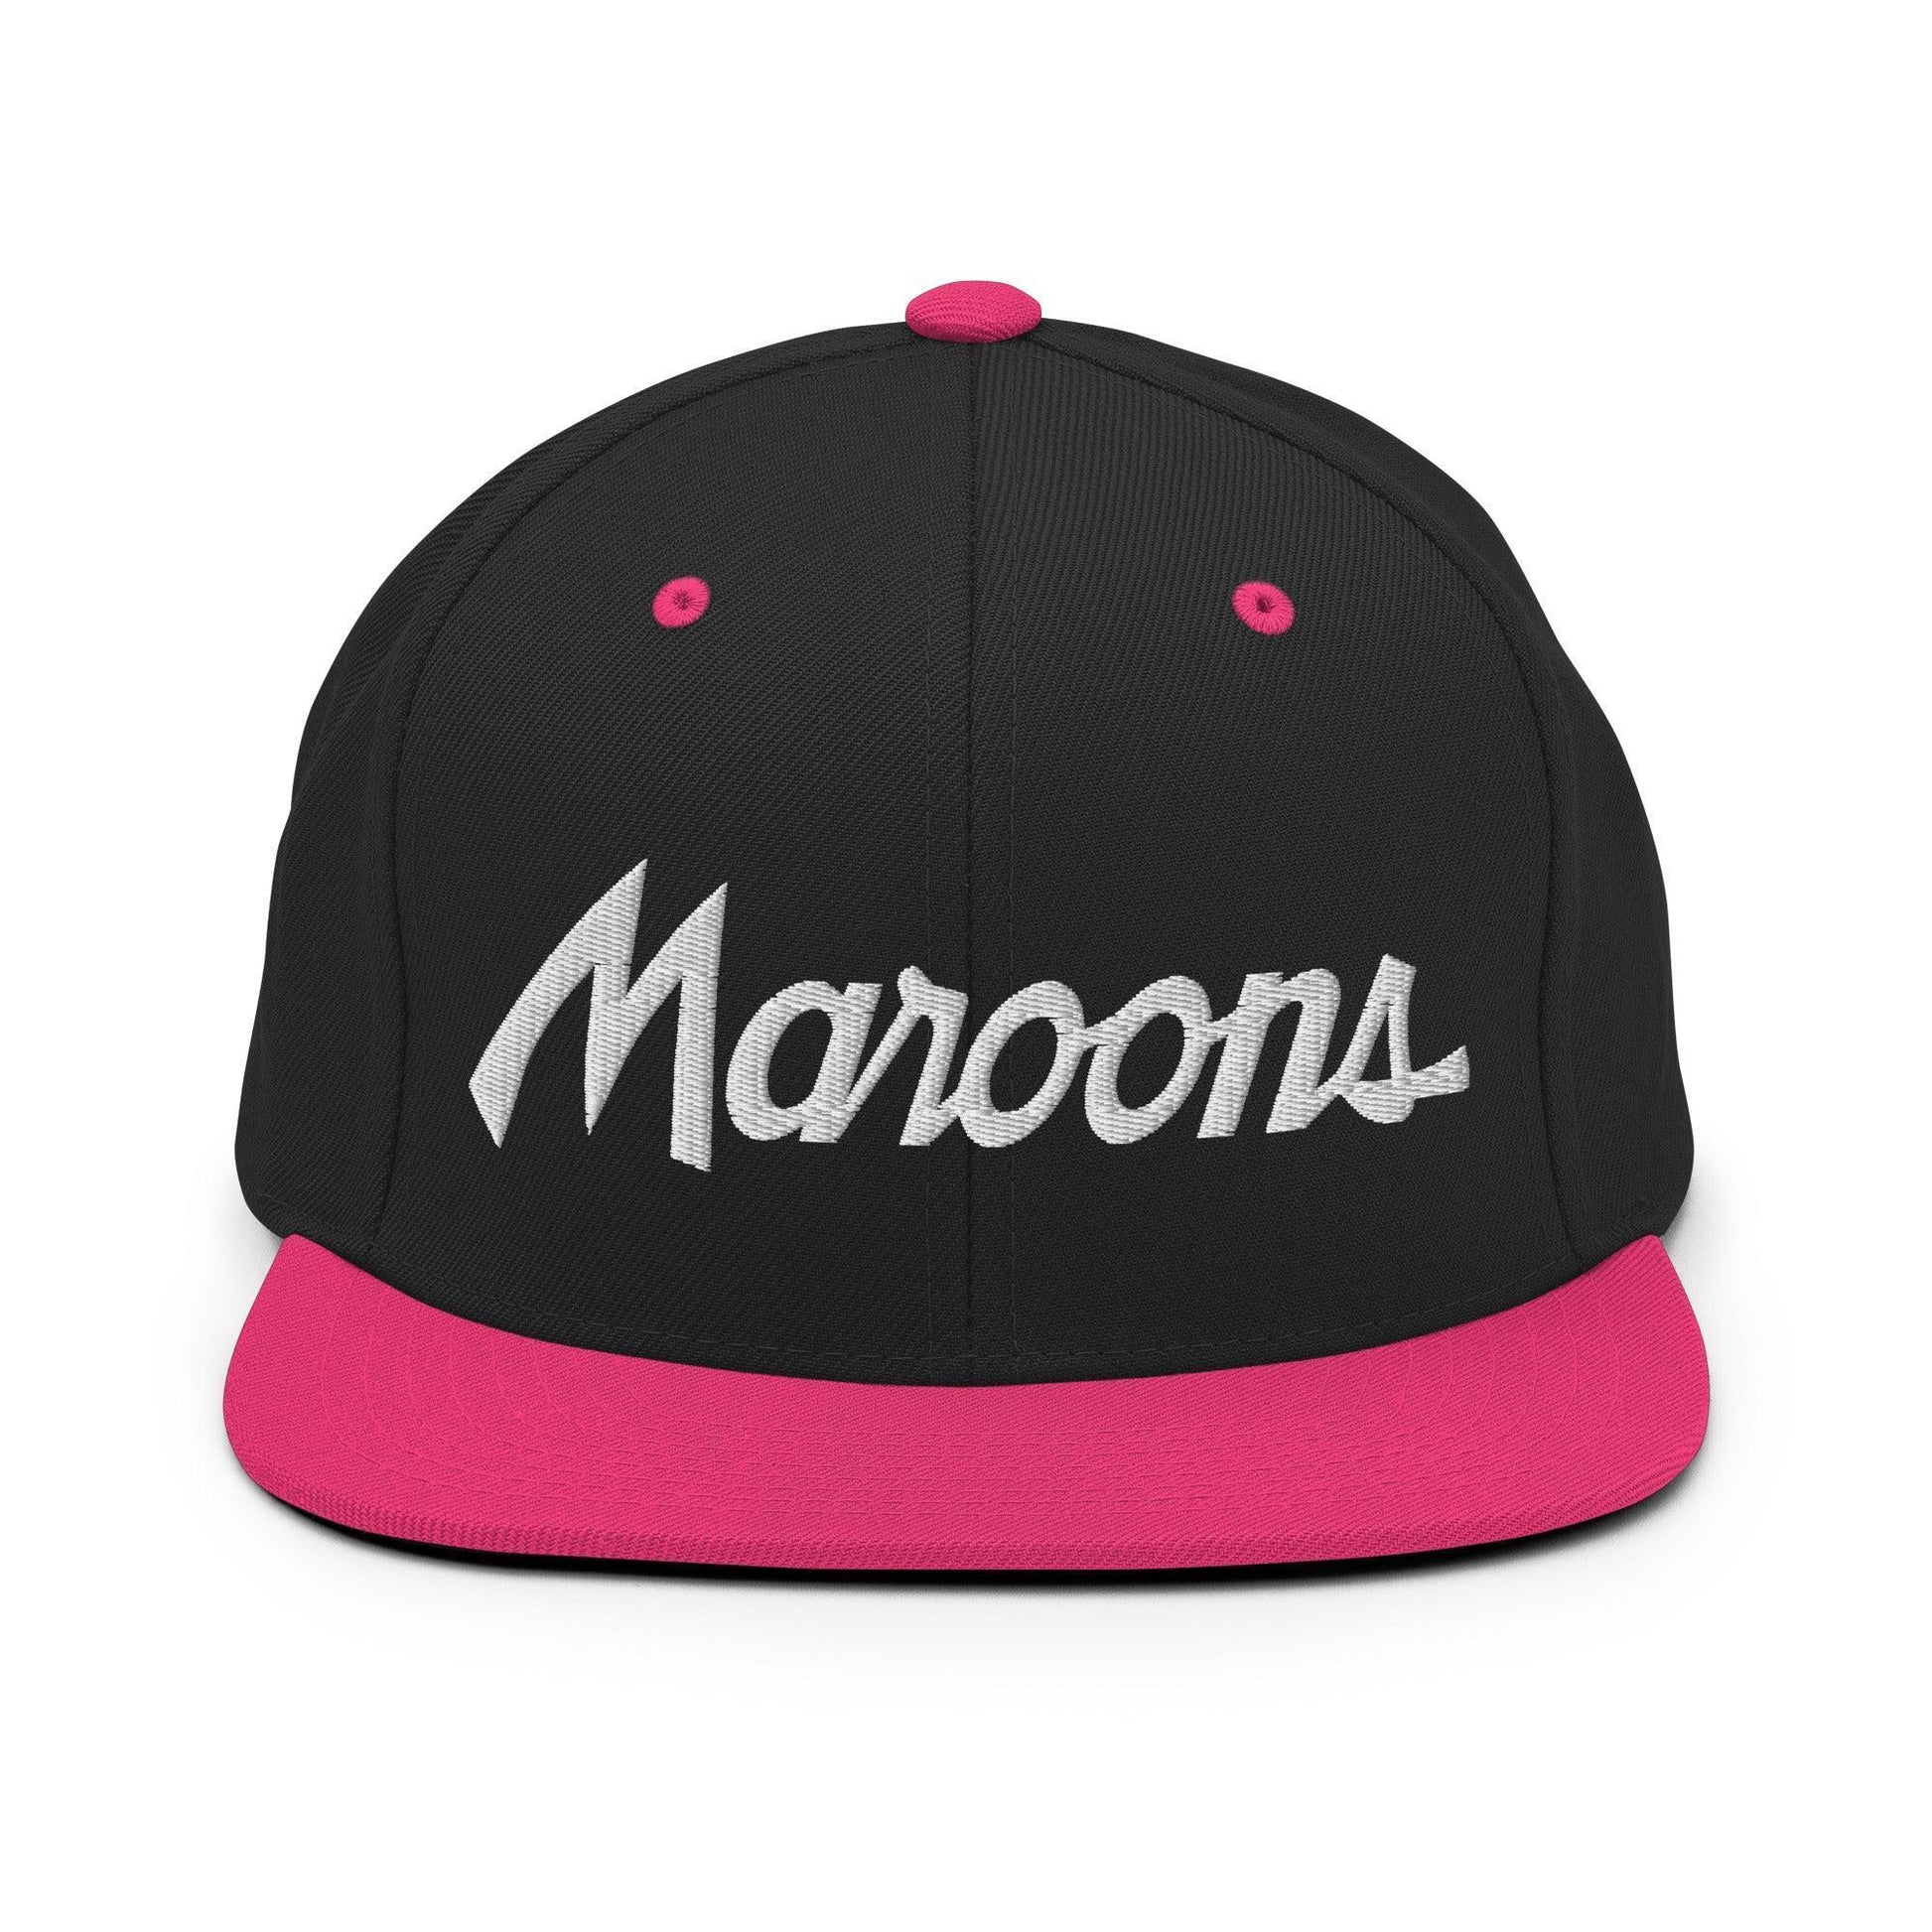 Maroons School Mascot Script Snapback Hat Black/ Neon Pink